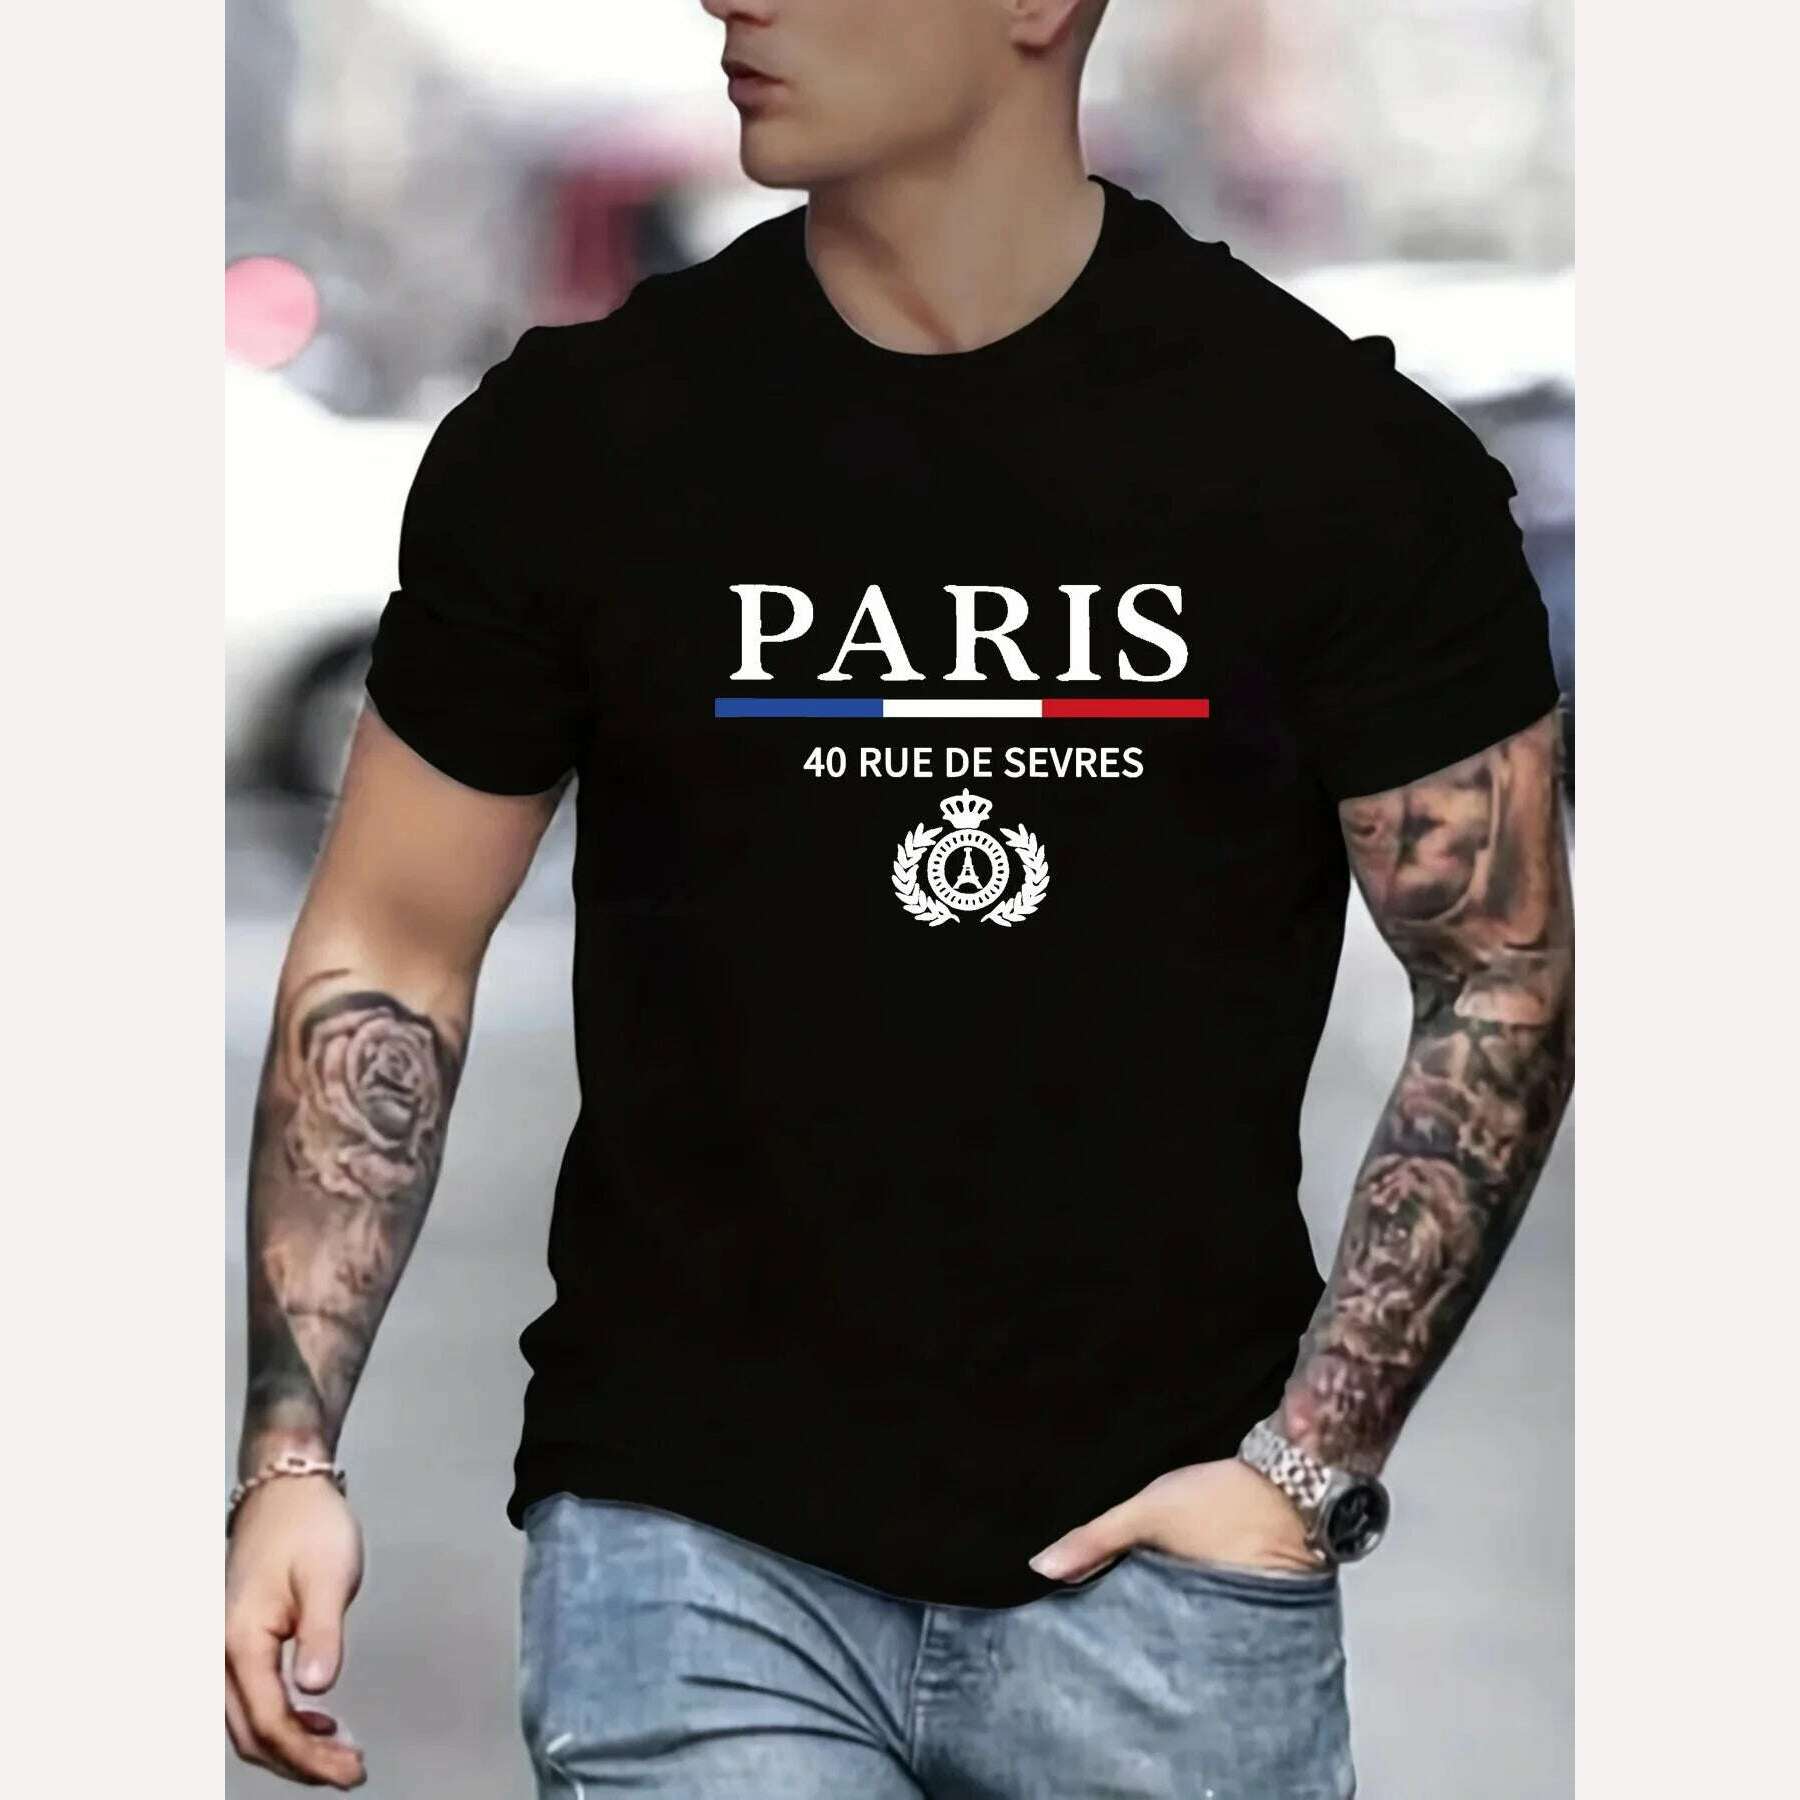 KIMLUD, Men's Autumn Winter Hooded Fashion Sweater Tshirt Tops, 0-PARIS-hei / XS, KIMLUD Womens Clothes